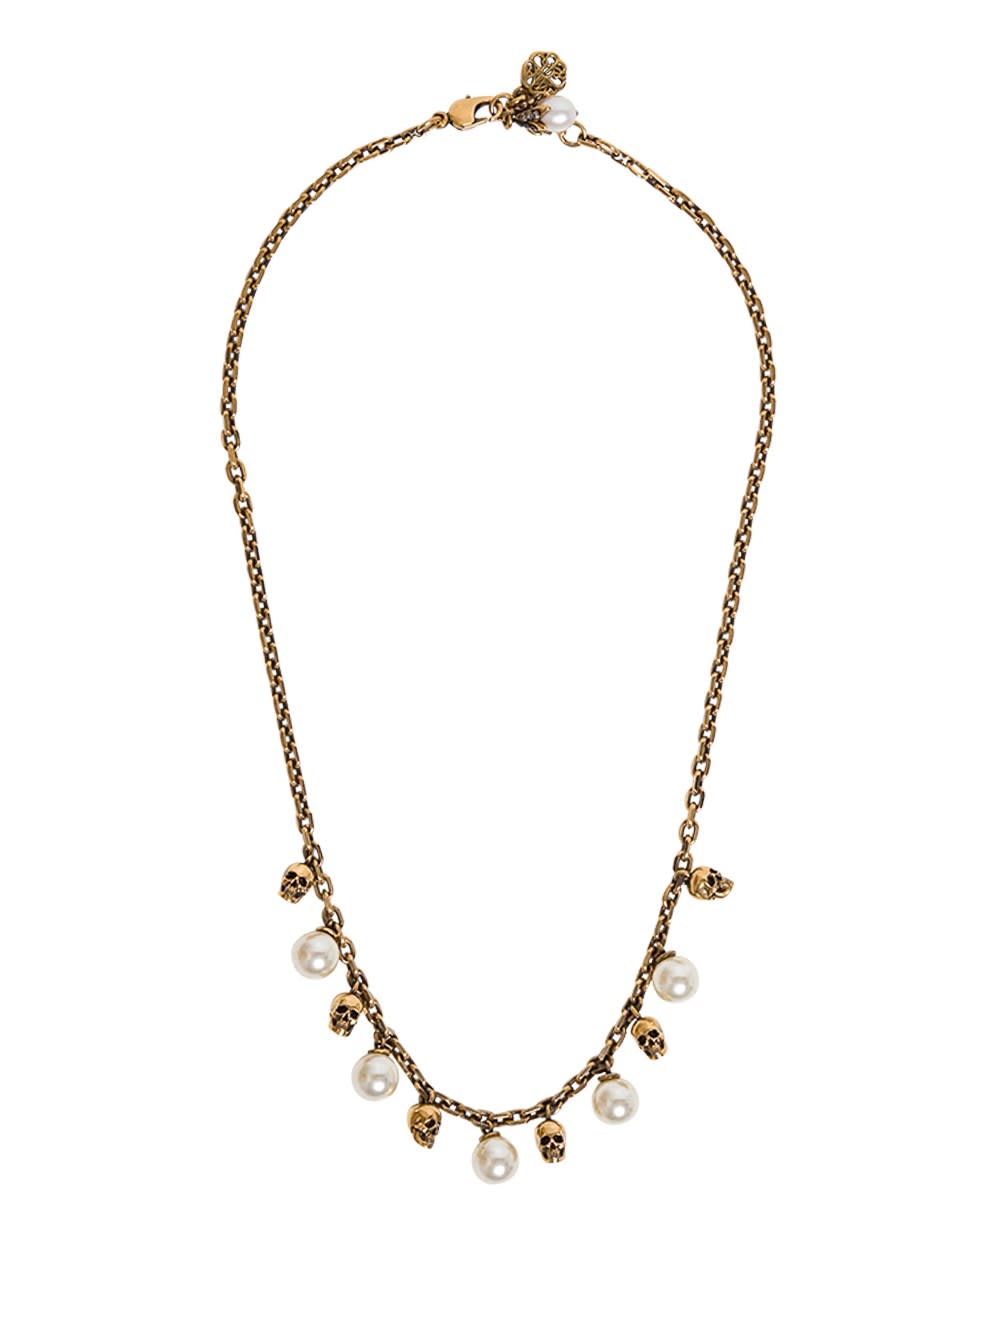 Alexander McQueen Skull Necklace In Antique Brass With Pearls